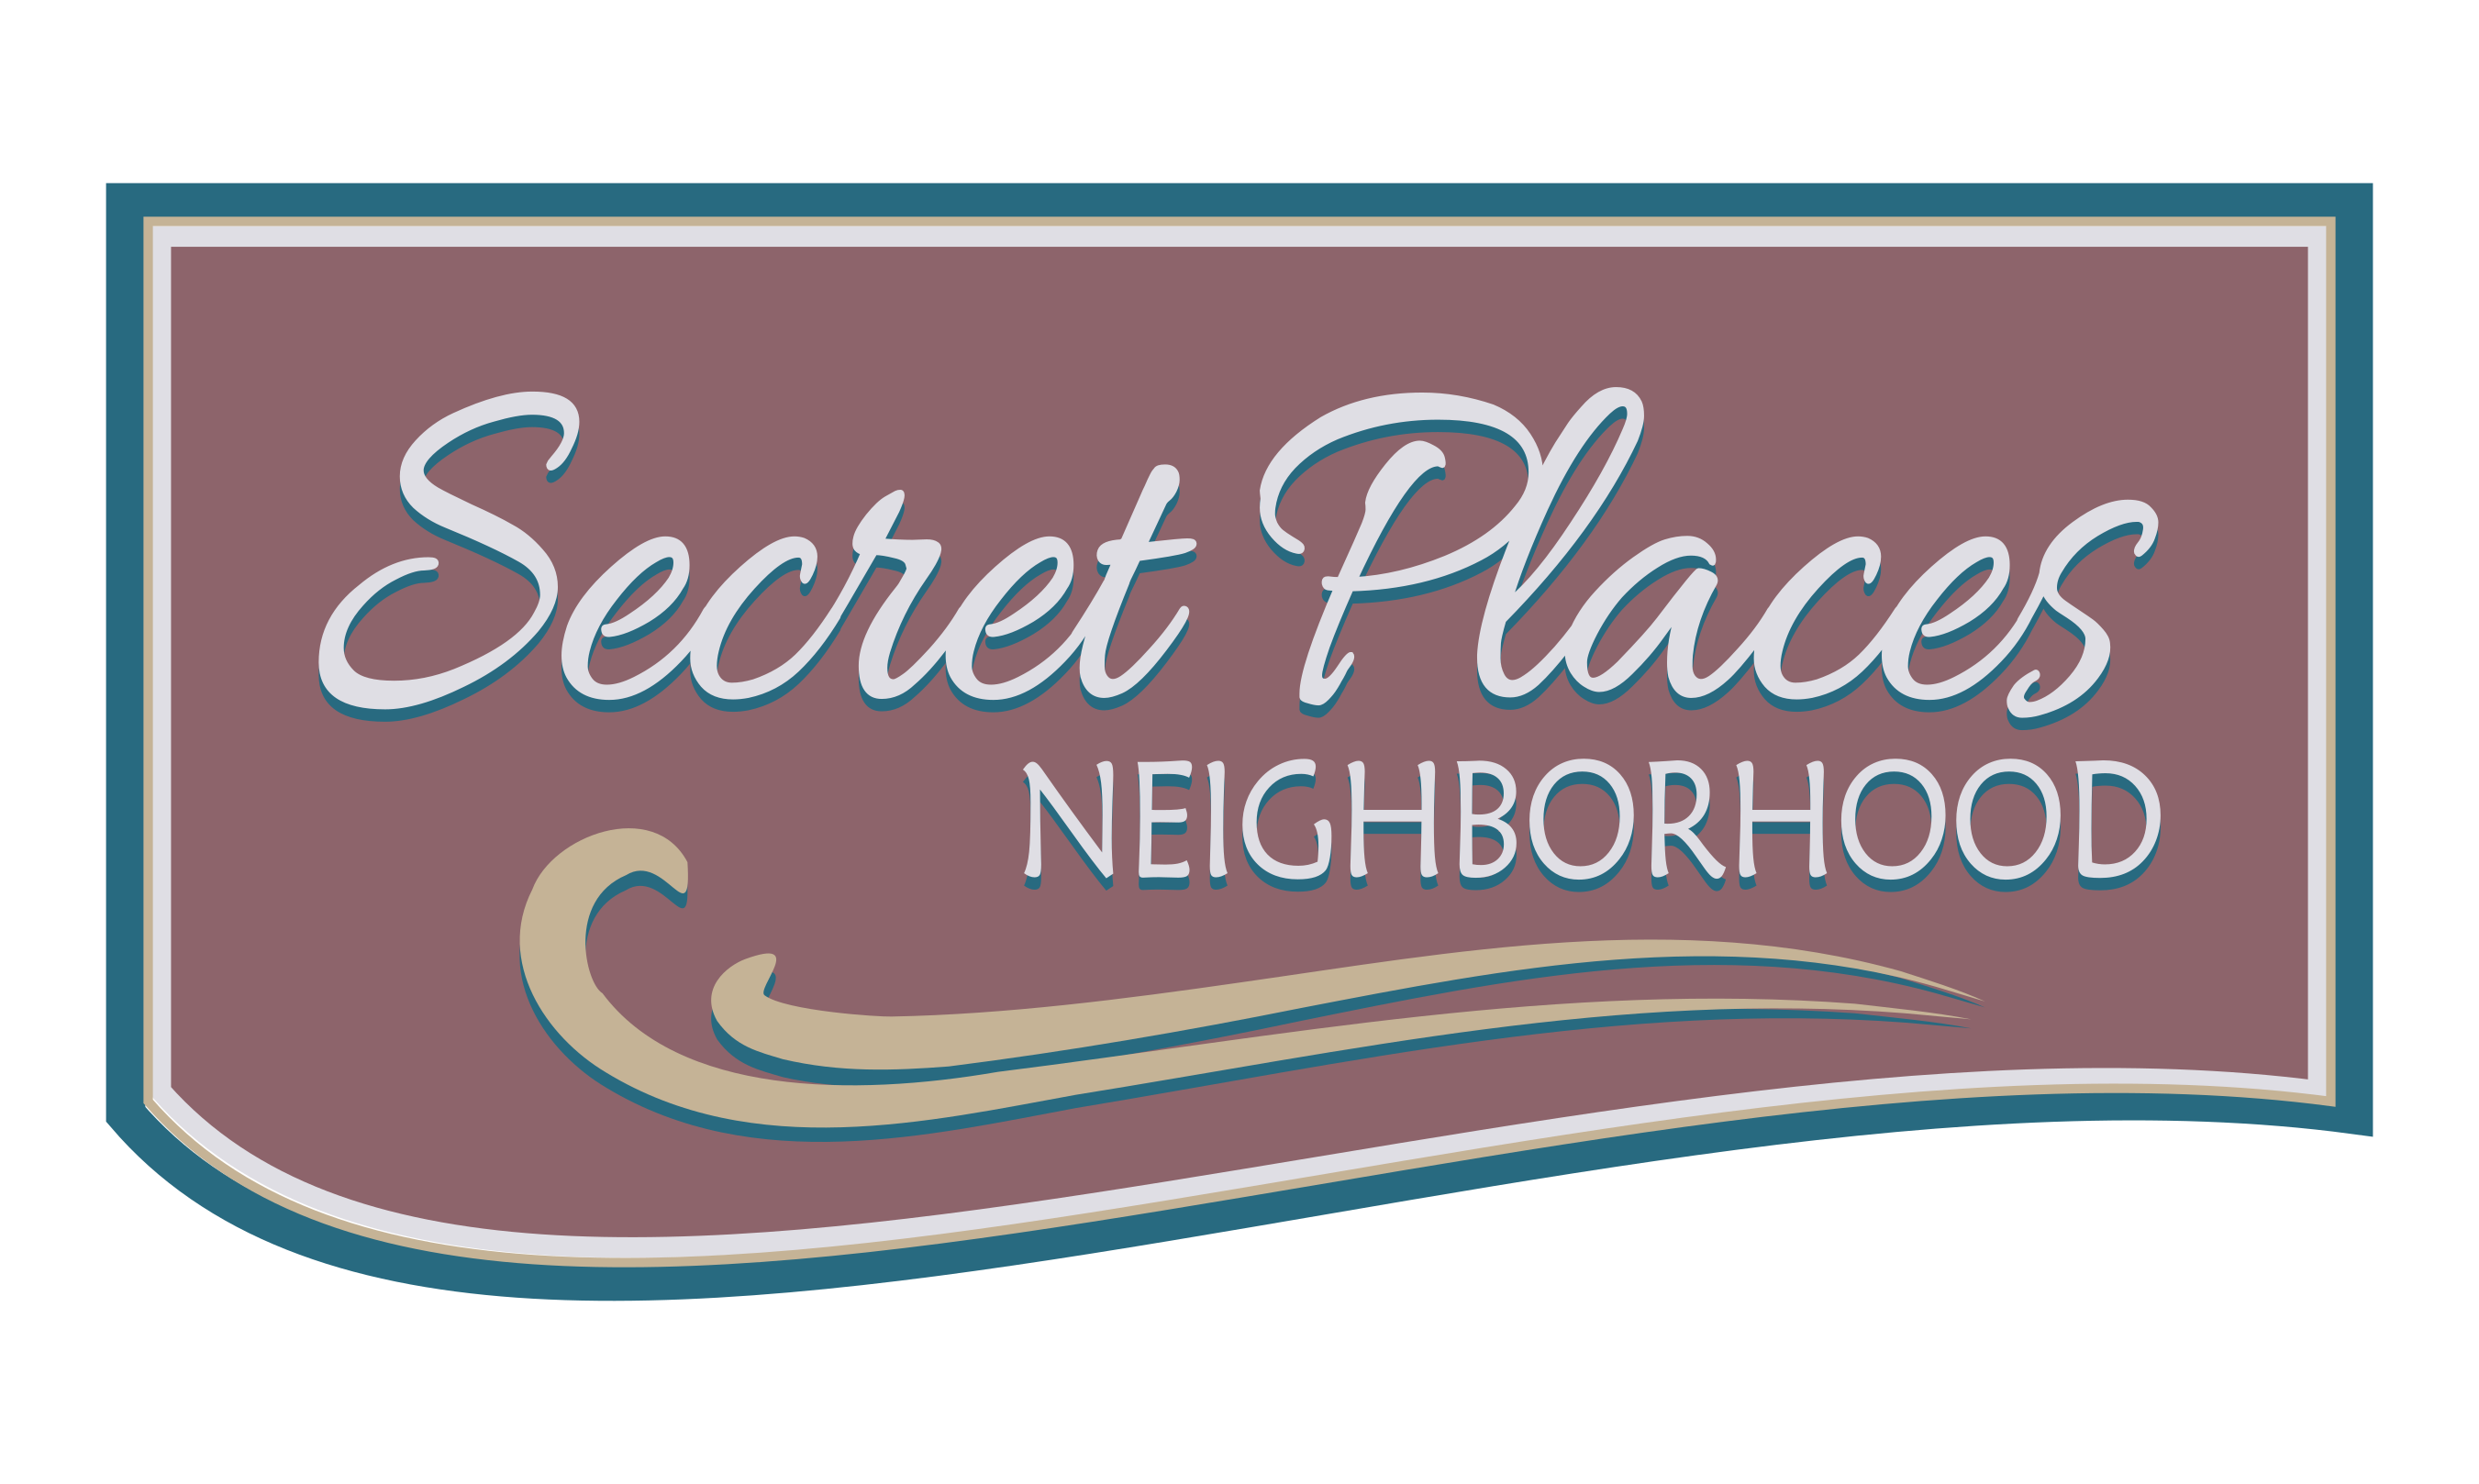 Discovering Madison’s Secret Places Neighborhood